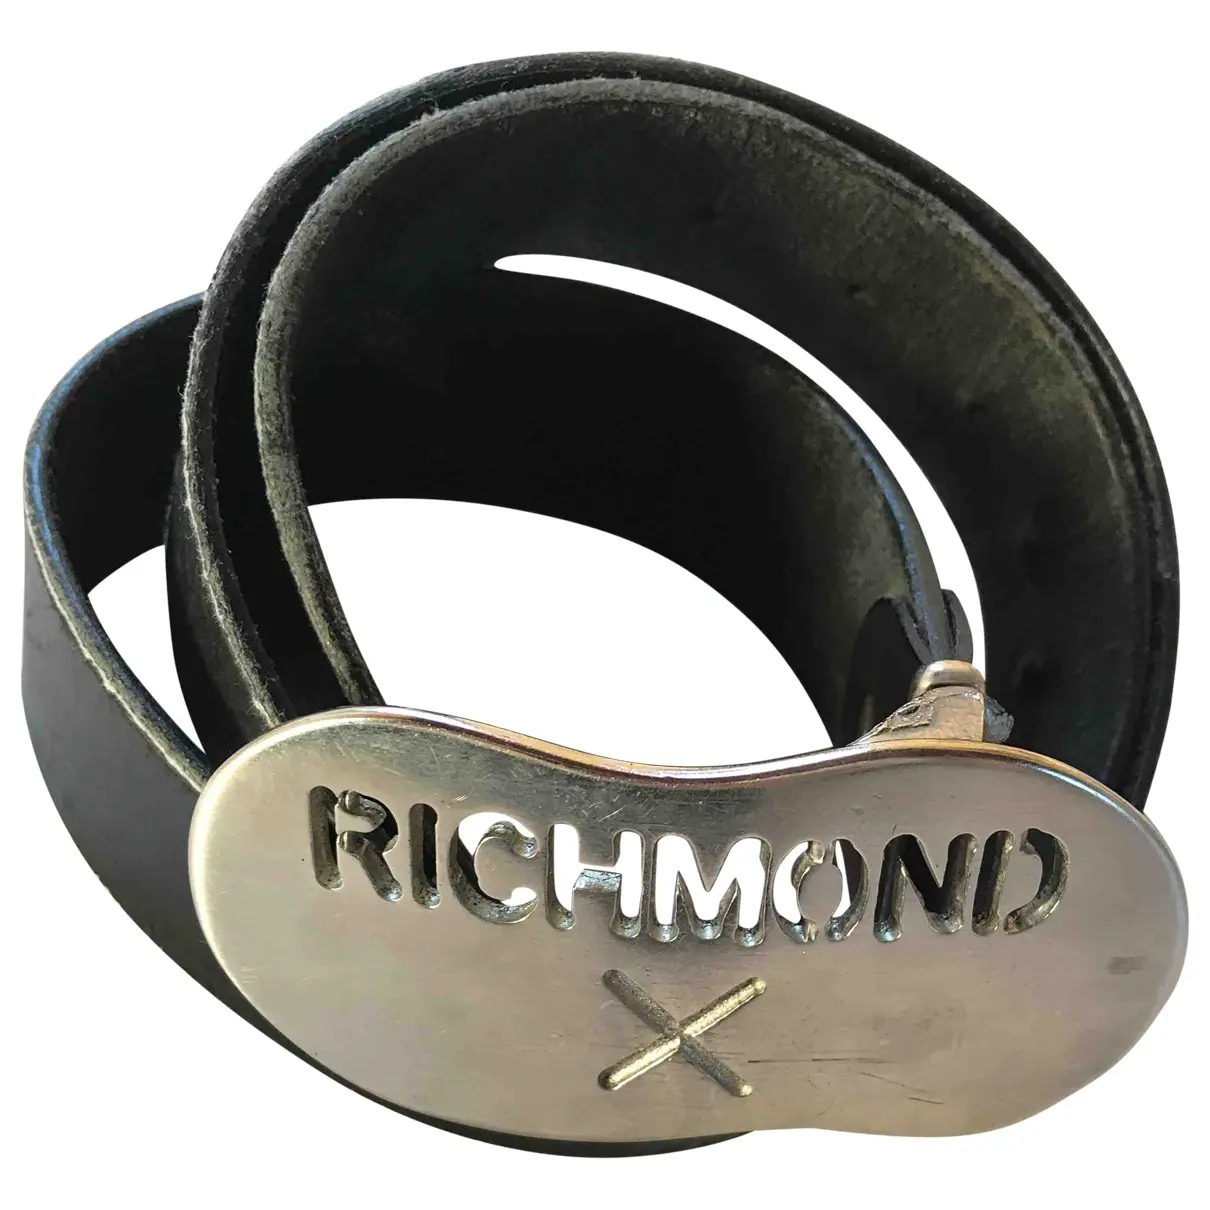 Leather belt John Richmond